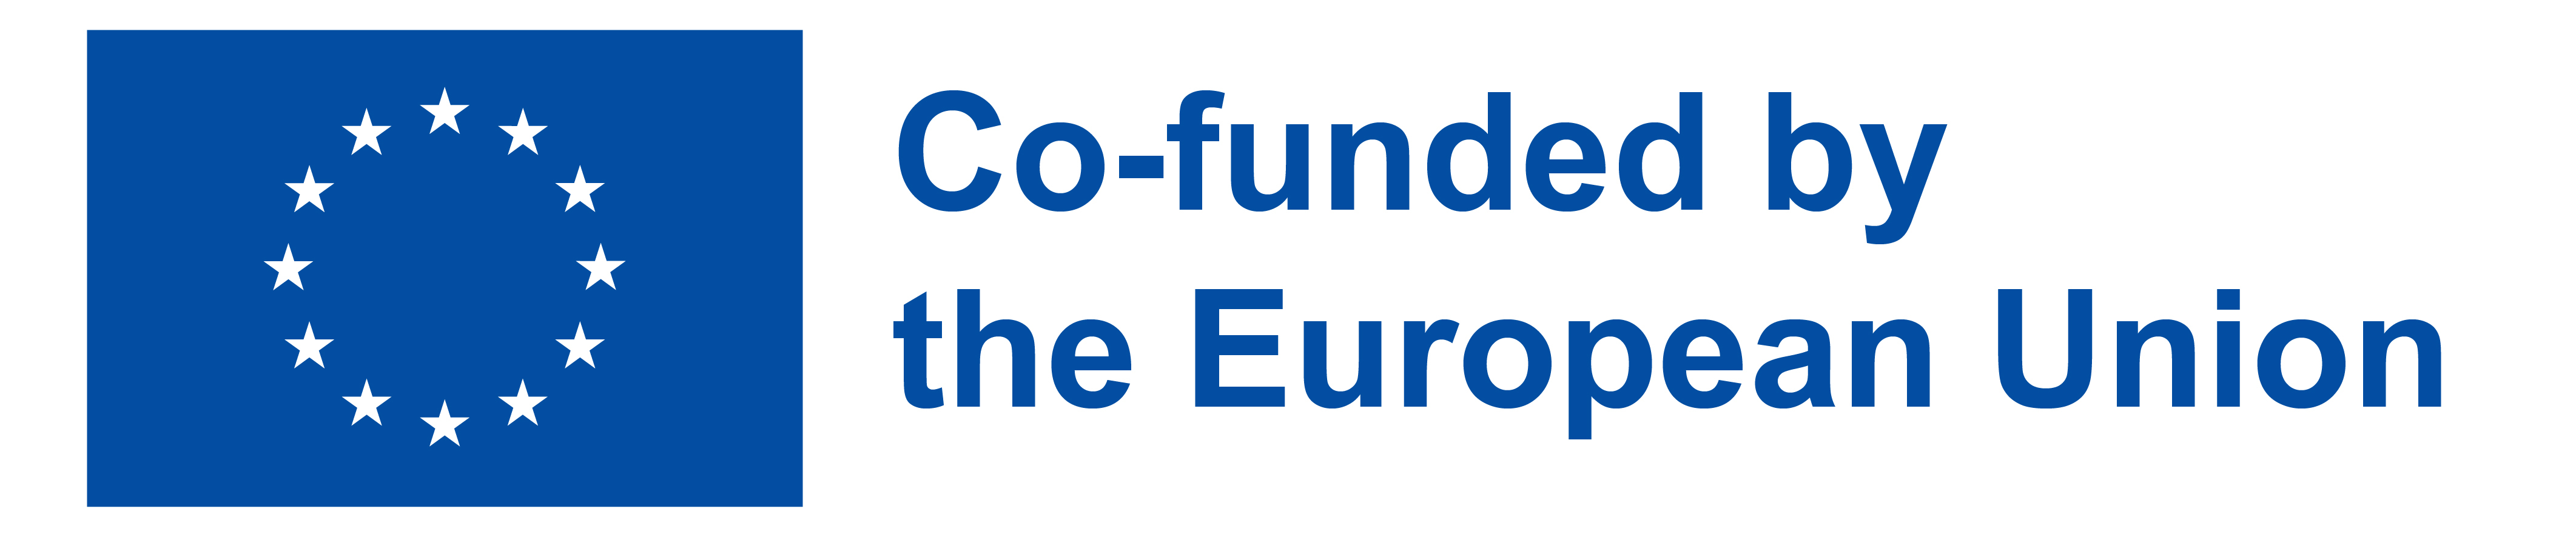 EN_Co-funded_by_the_EU_PANTONE